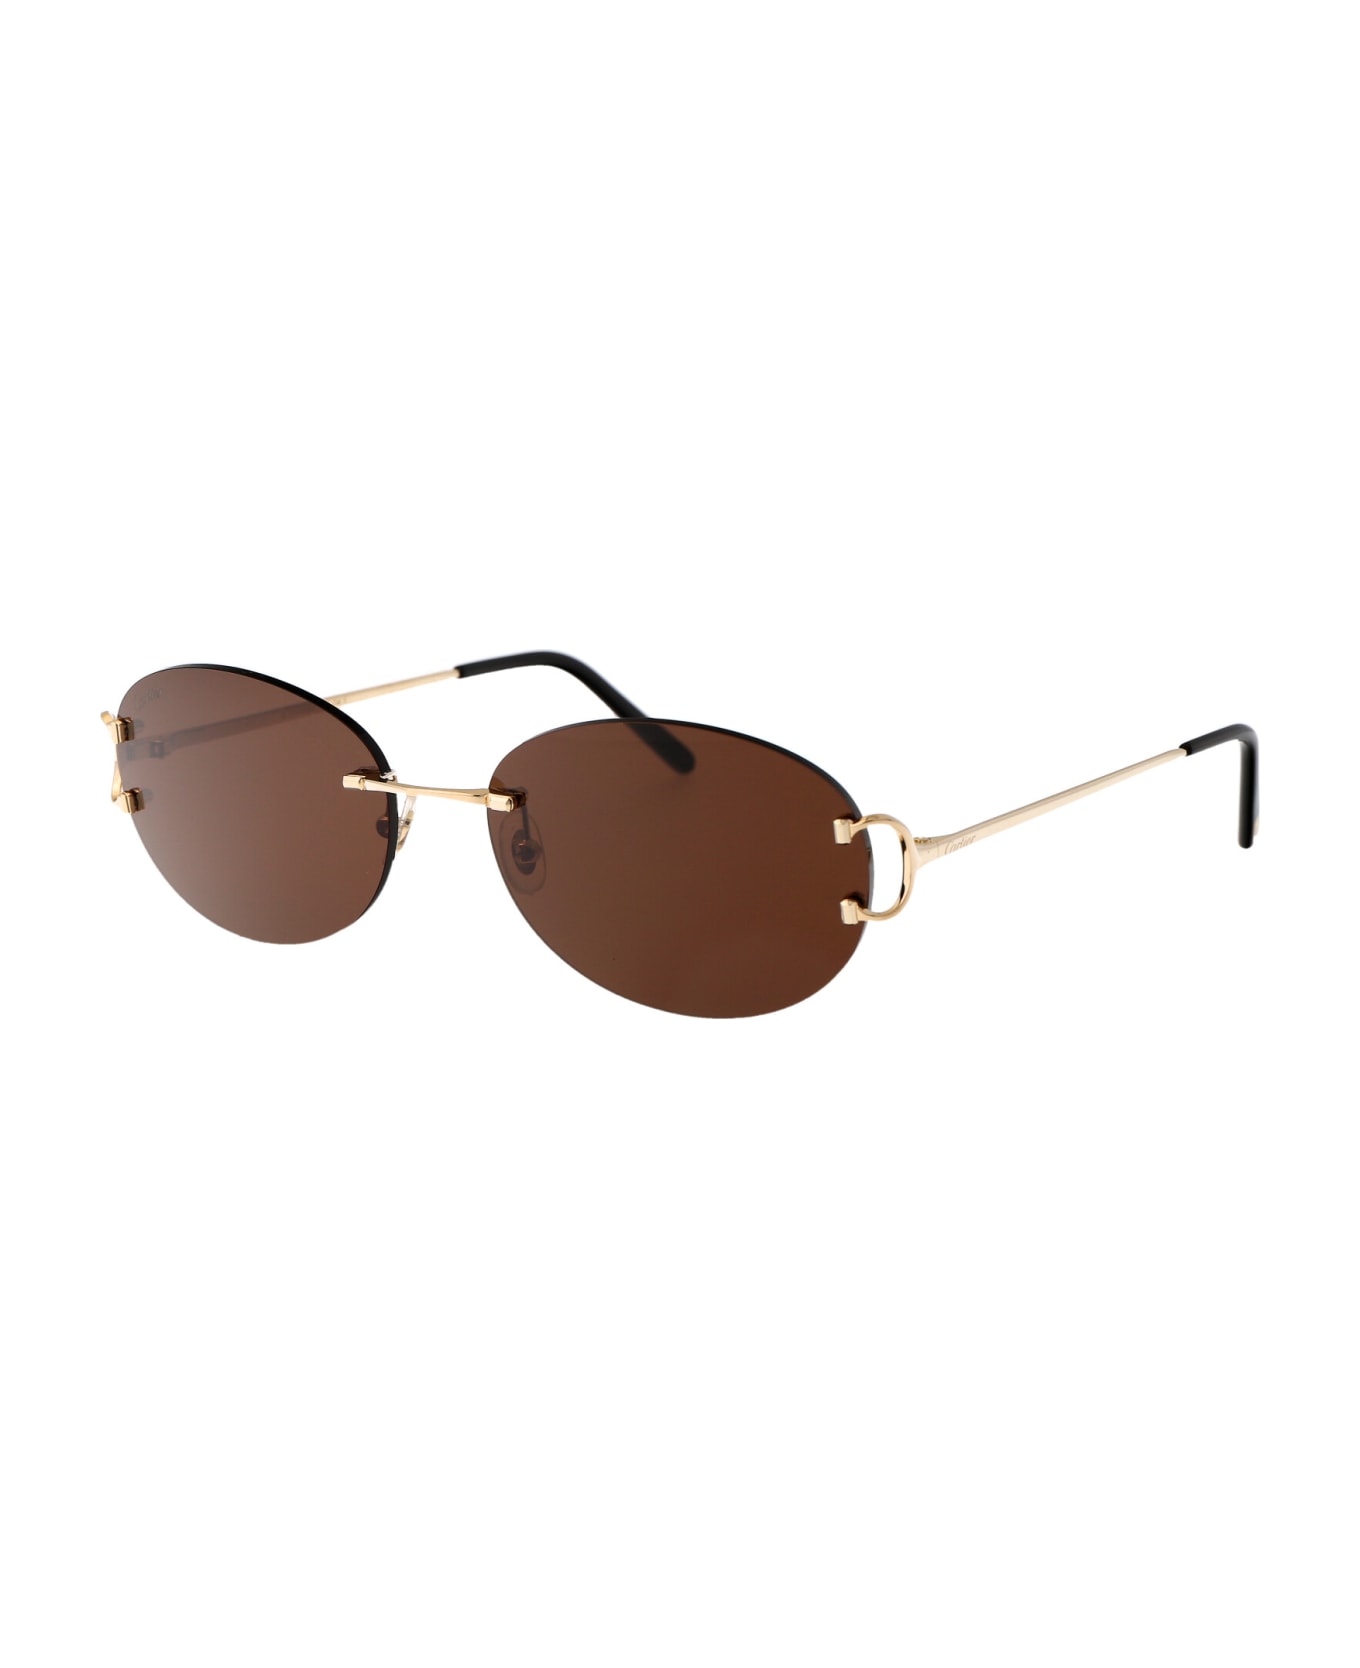 Cartier Eyewear Ct0029rs Sunglasses - 002 GOLD GOLD BROWN サングラス